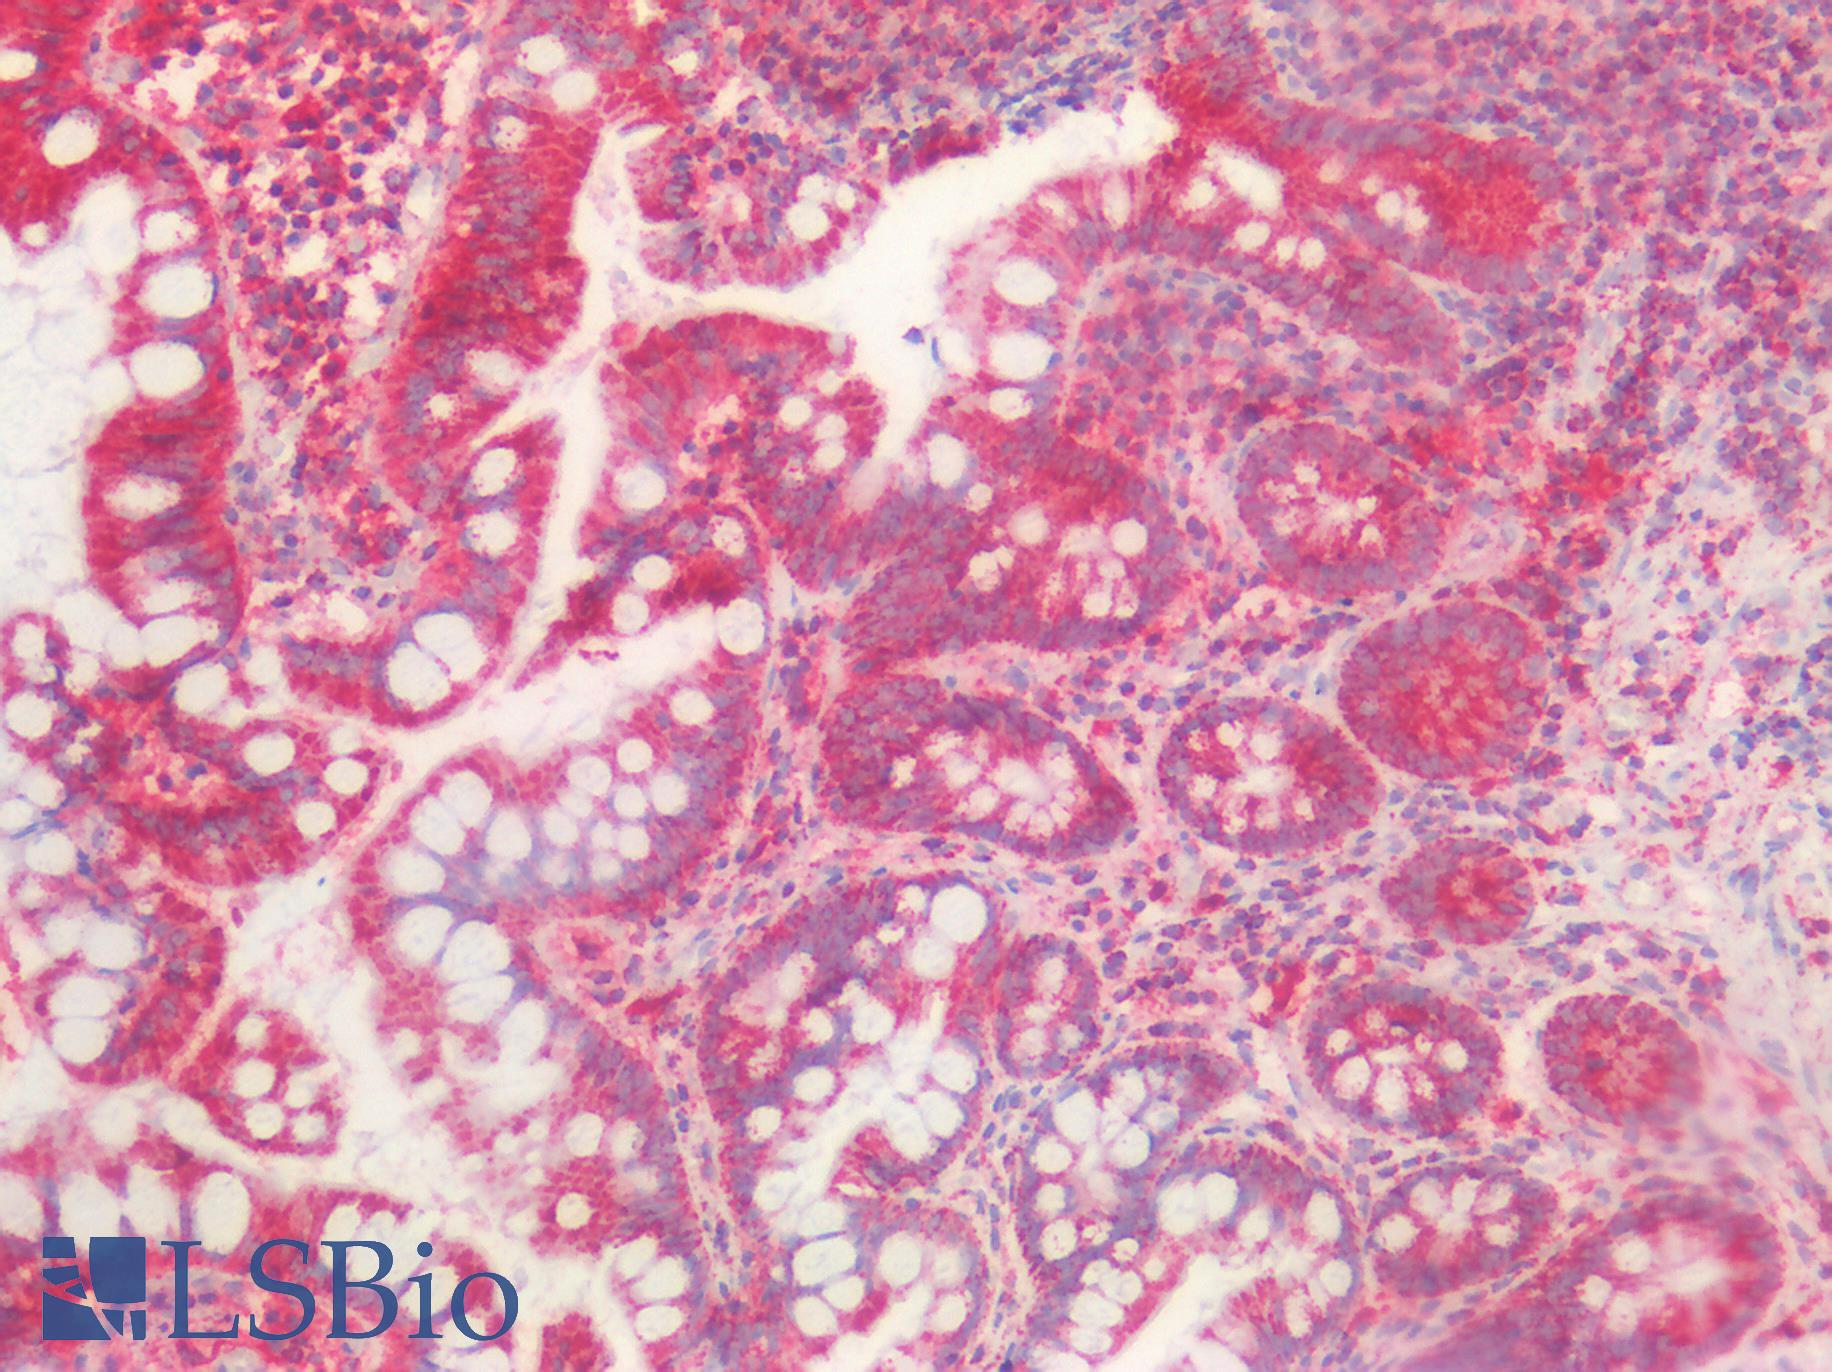 HSPD1 / HSP60 Antibody - Human Small Intestine: Formalin-Fixed, Paraffin-Embedded (FFPE)